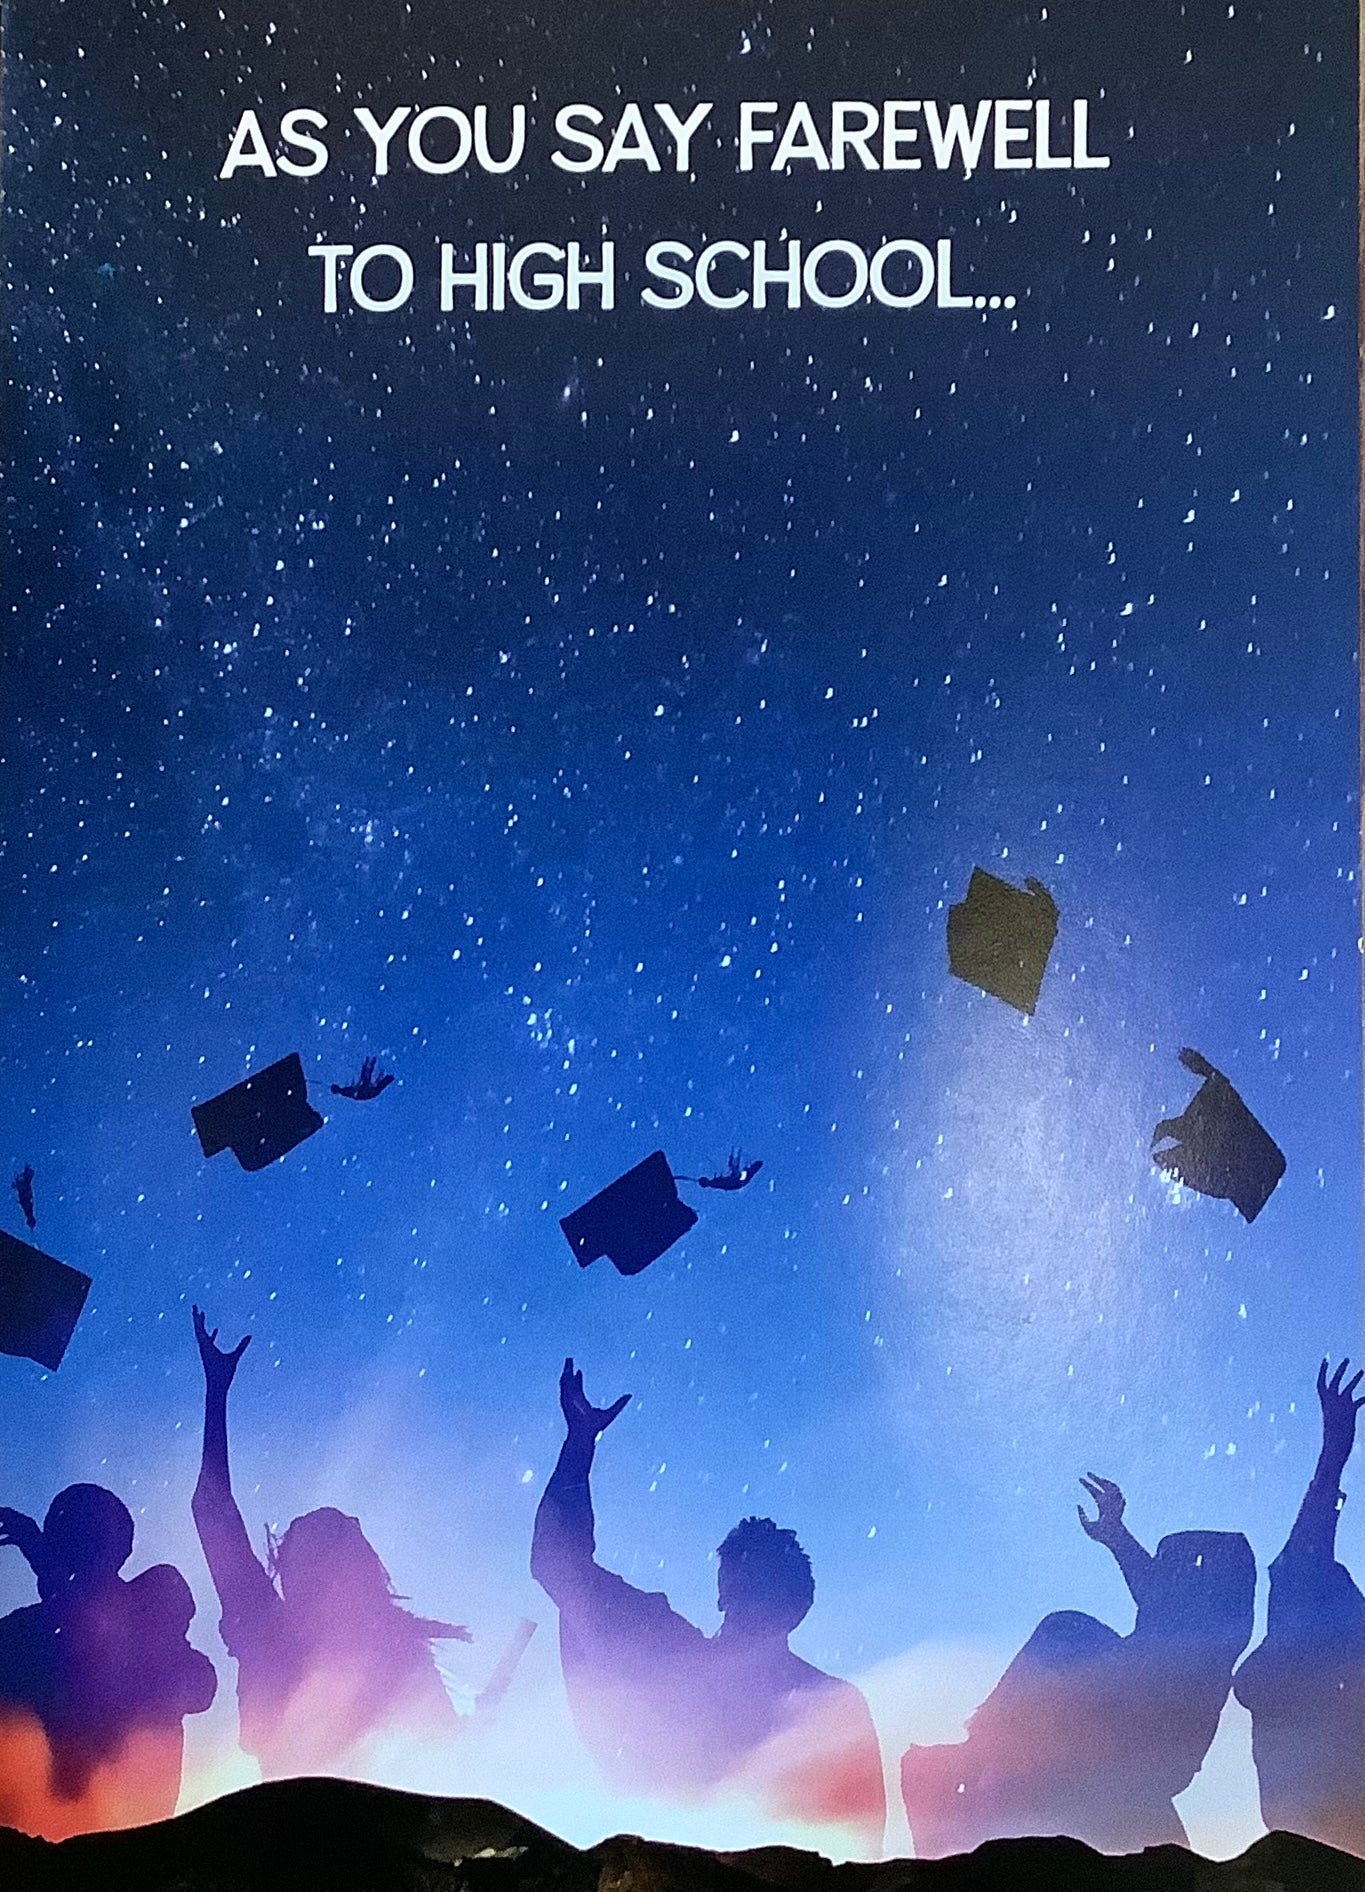 Graduation-High School